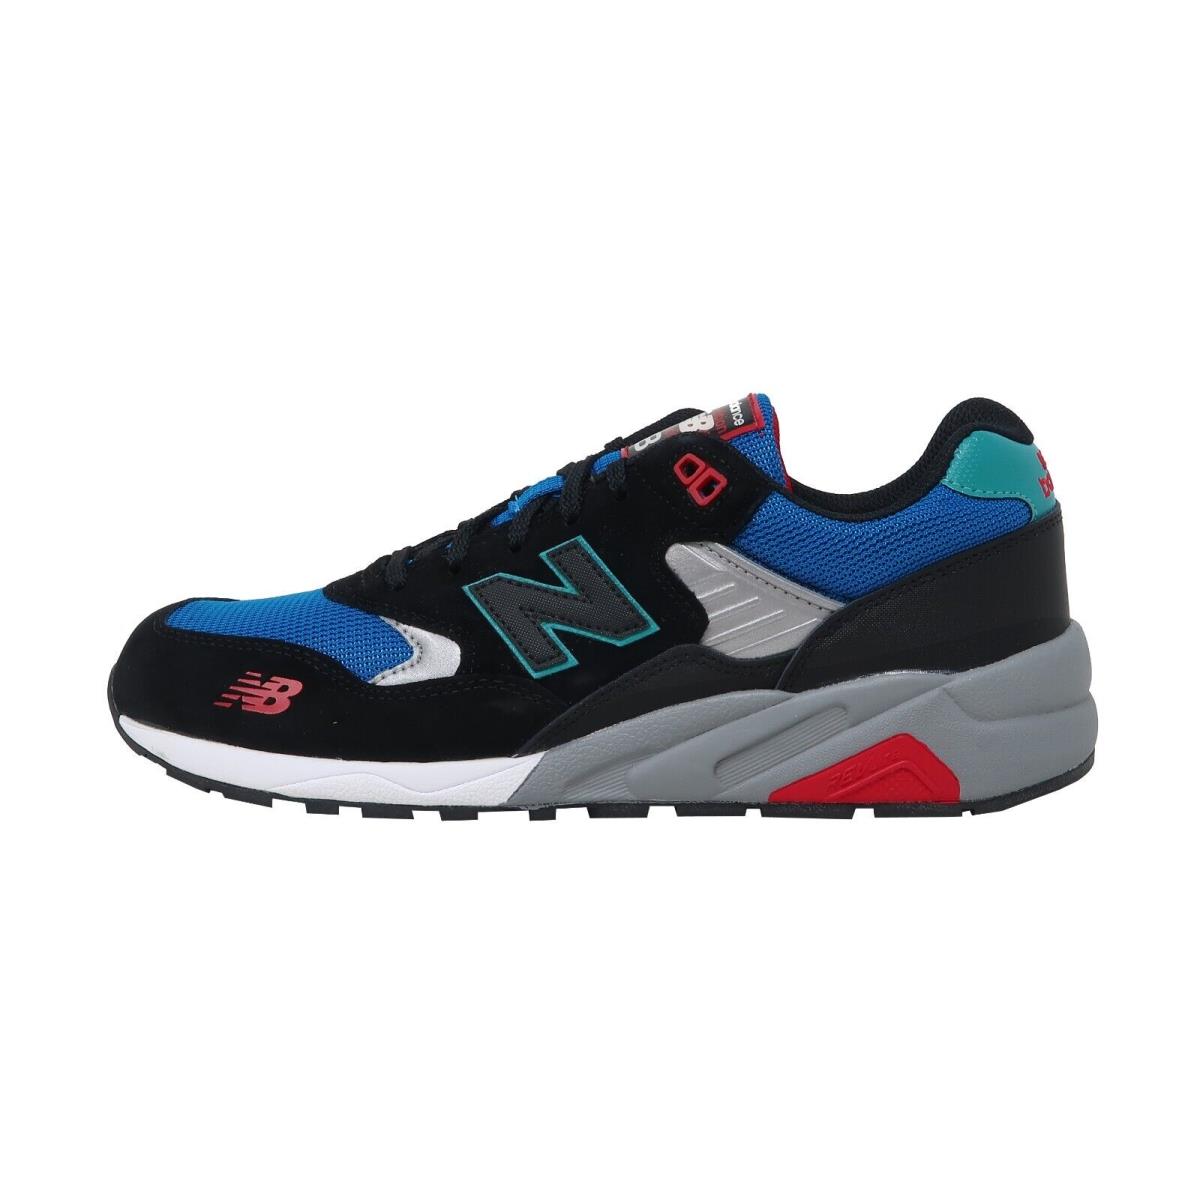 New Balance 580 Elite Edition Men`s Running Shoes Sneakers MRT580BF - Black/blue